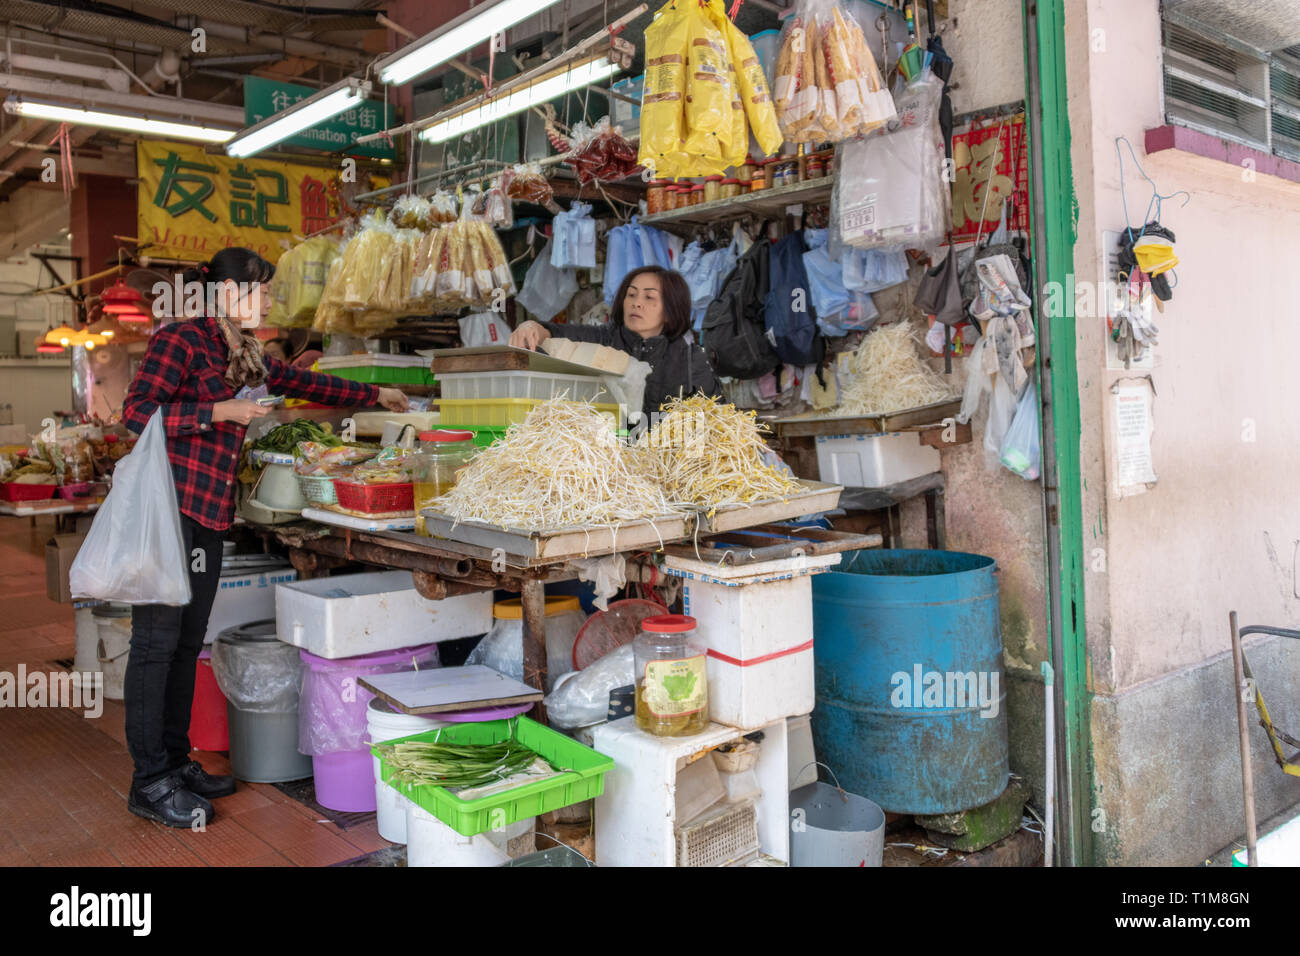 Beansprout Market Stall, Kowloon, Hong Kong Stock Photo